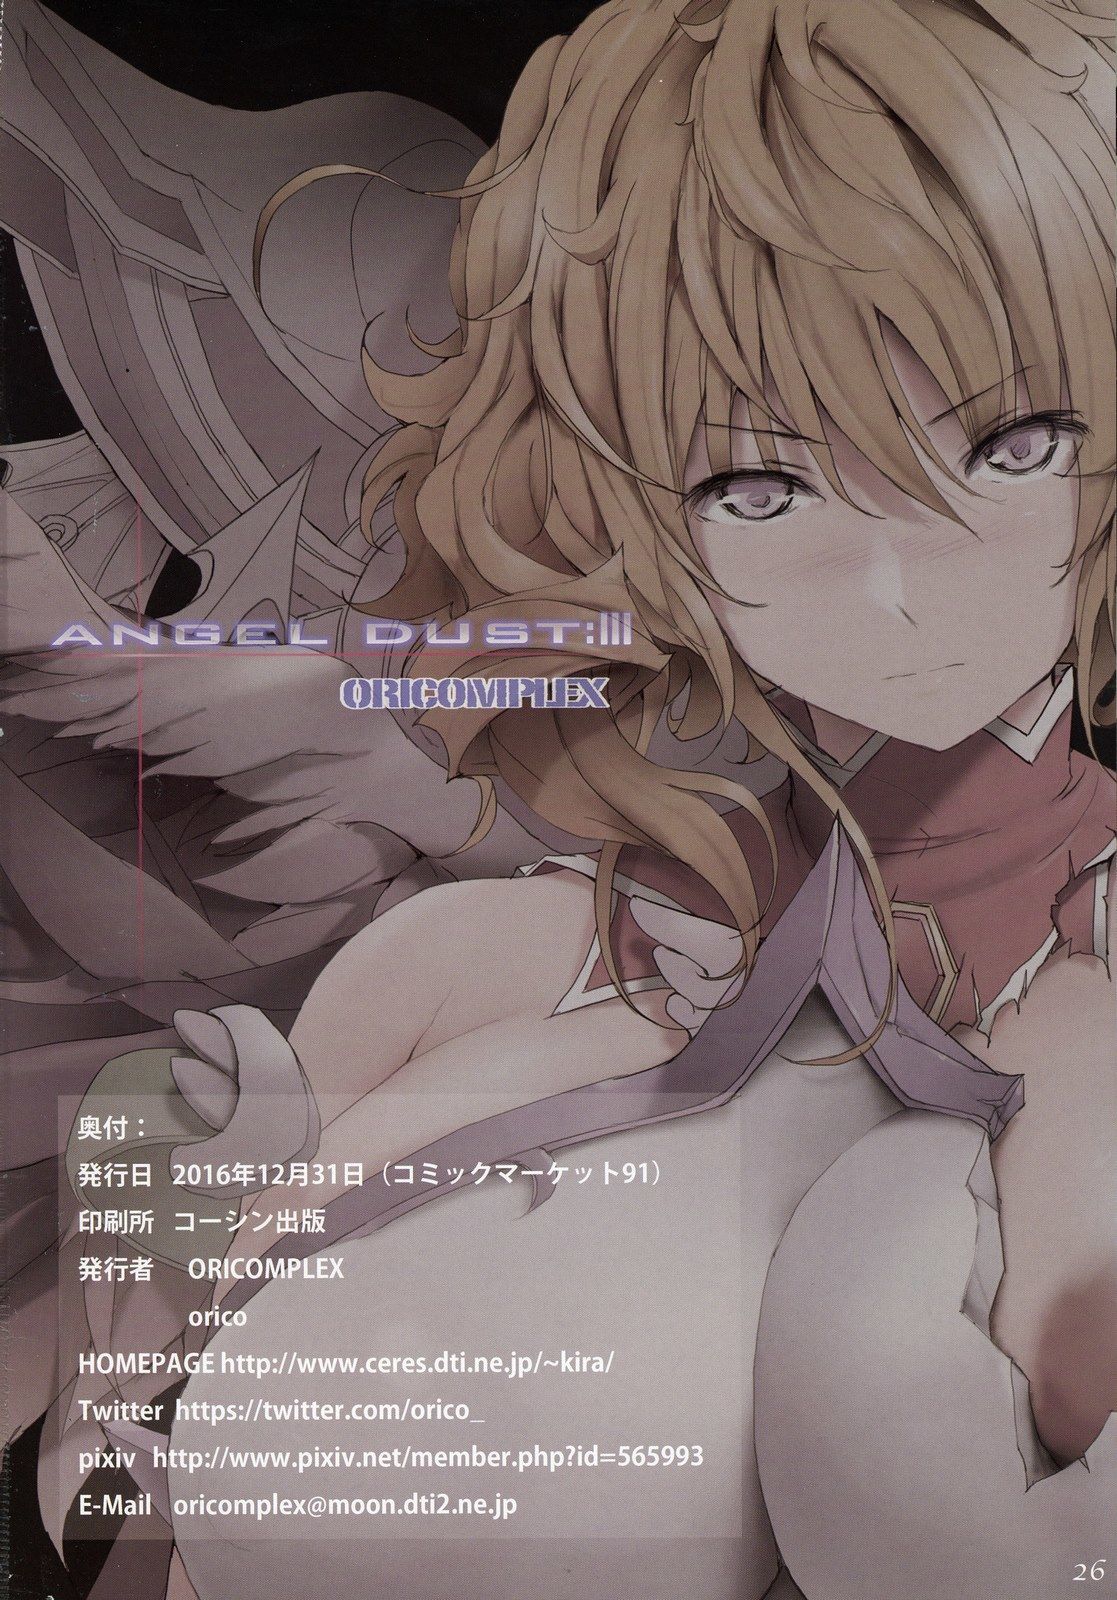 Angel Dust III Oricomplex (Queens Blade) page 22